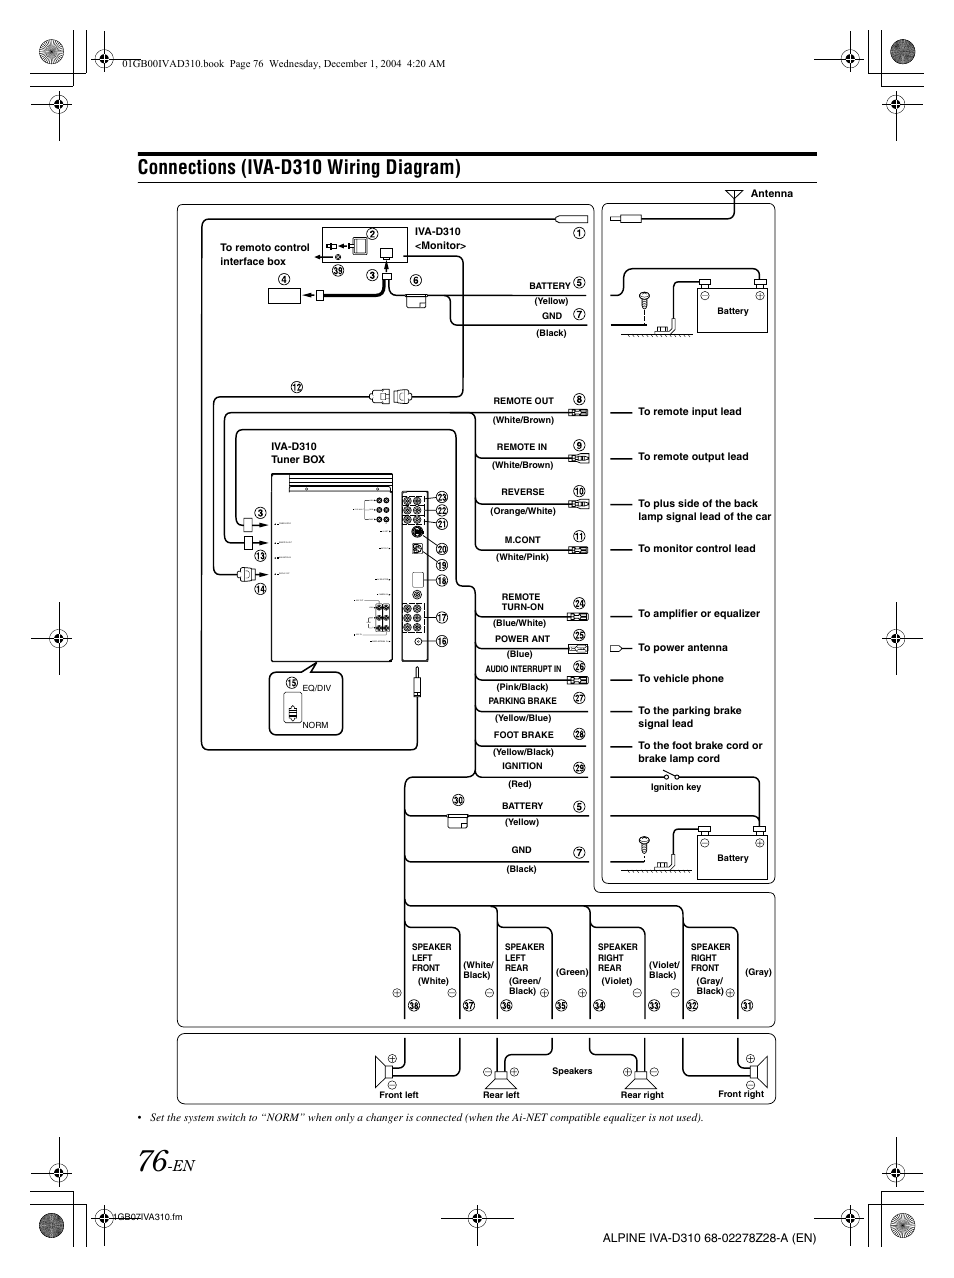 alpine iva-w205 wiring diagram